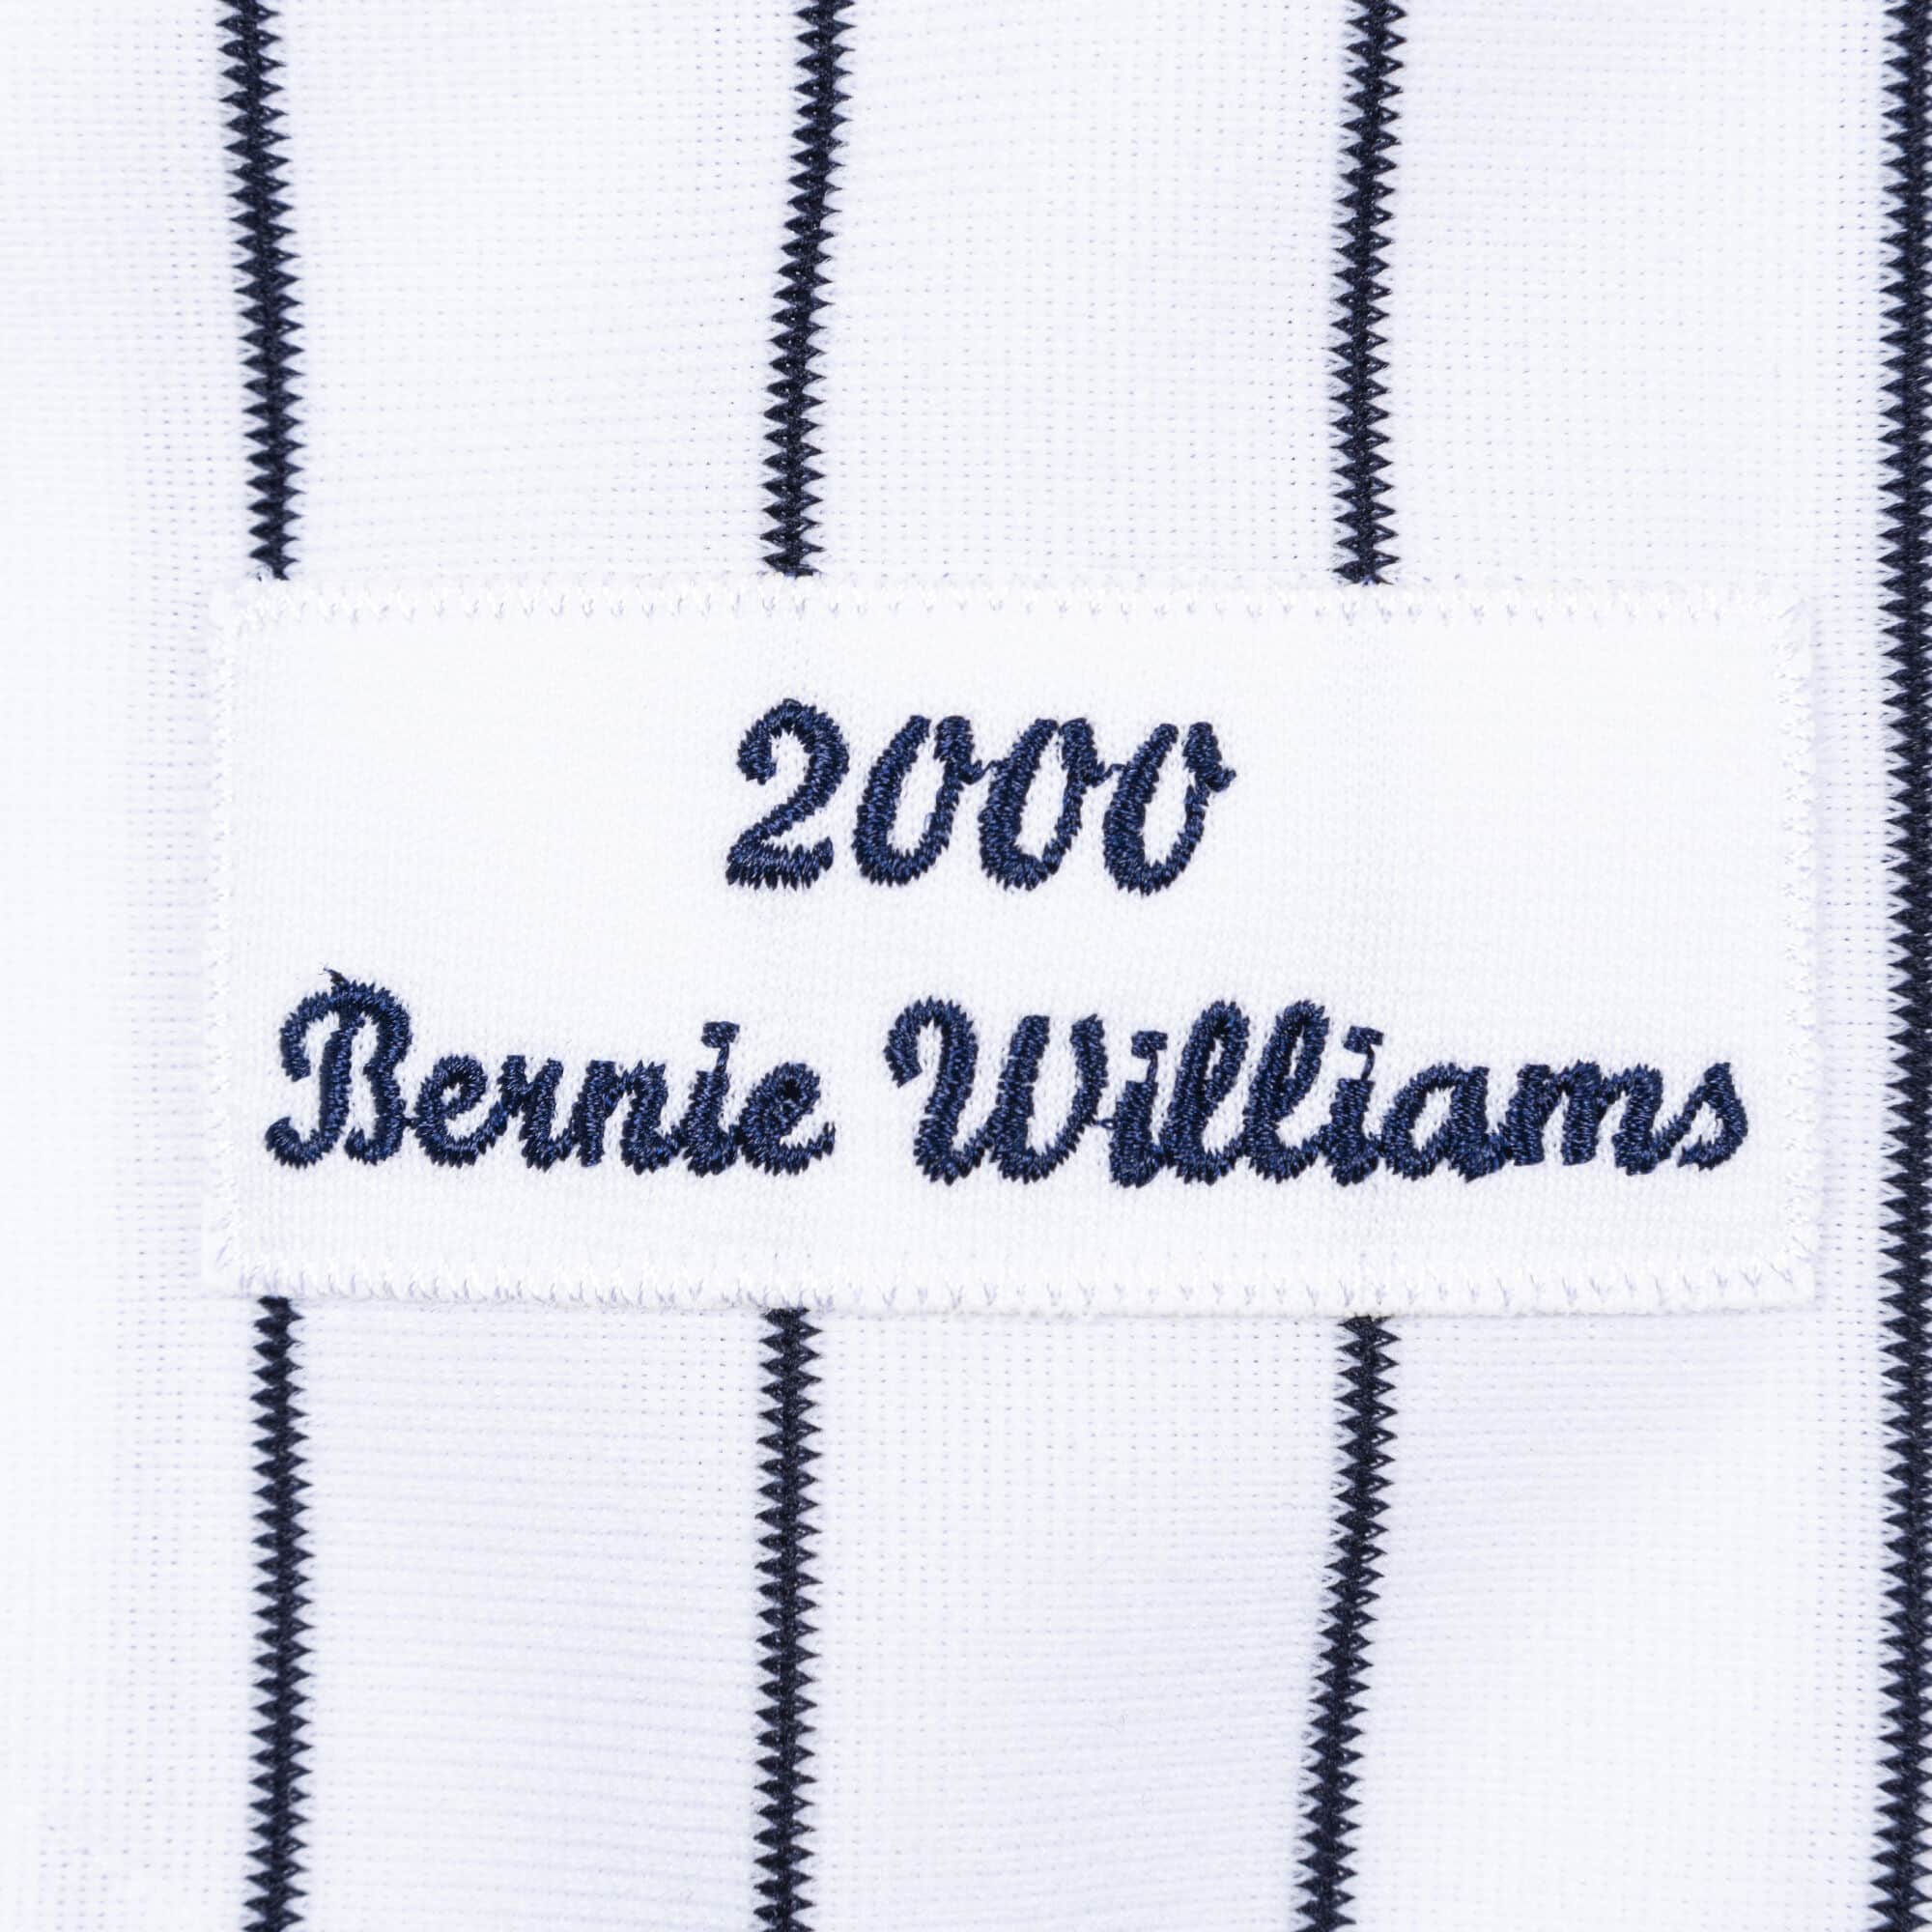 Mitchell & Ness Men's Bernie Williams New York Yankees Authentic  Cooperstown Jersey - Macy's